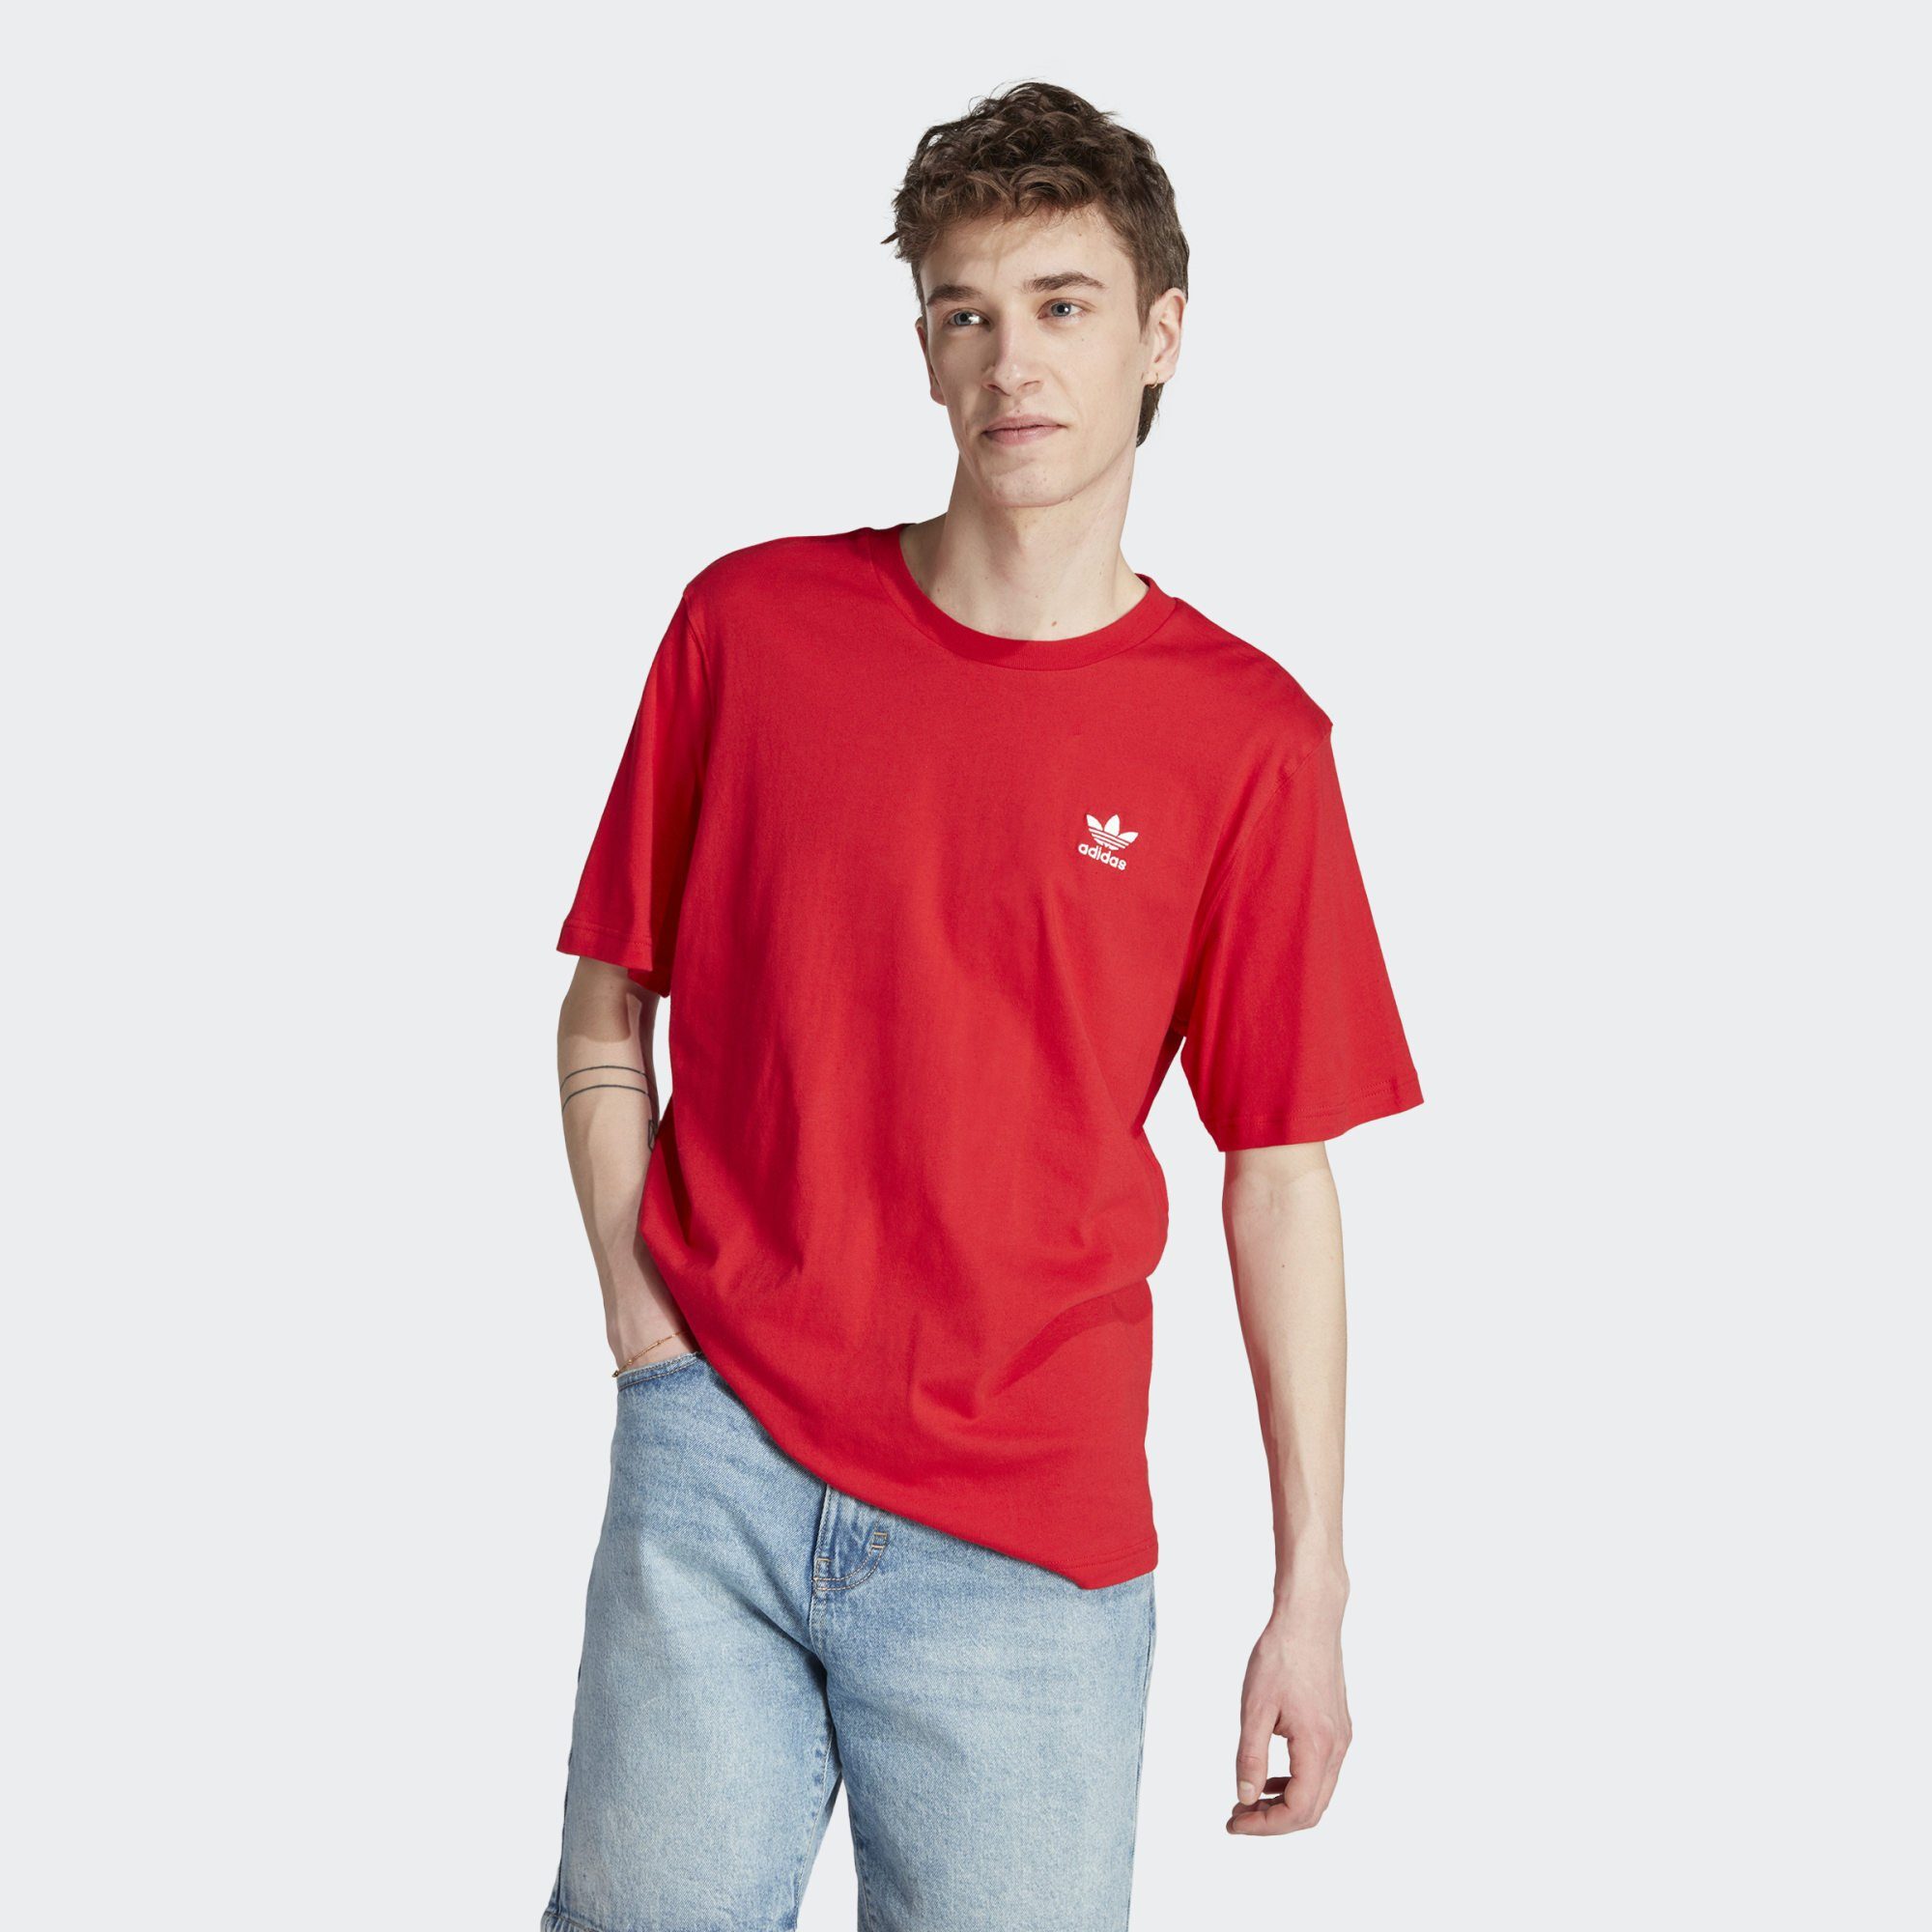 Better Originals TREFOIL T-Shirt / ESSENTIALS White adidas T-SHIRT Scarlet